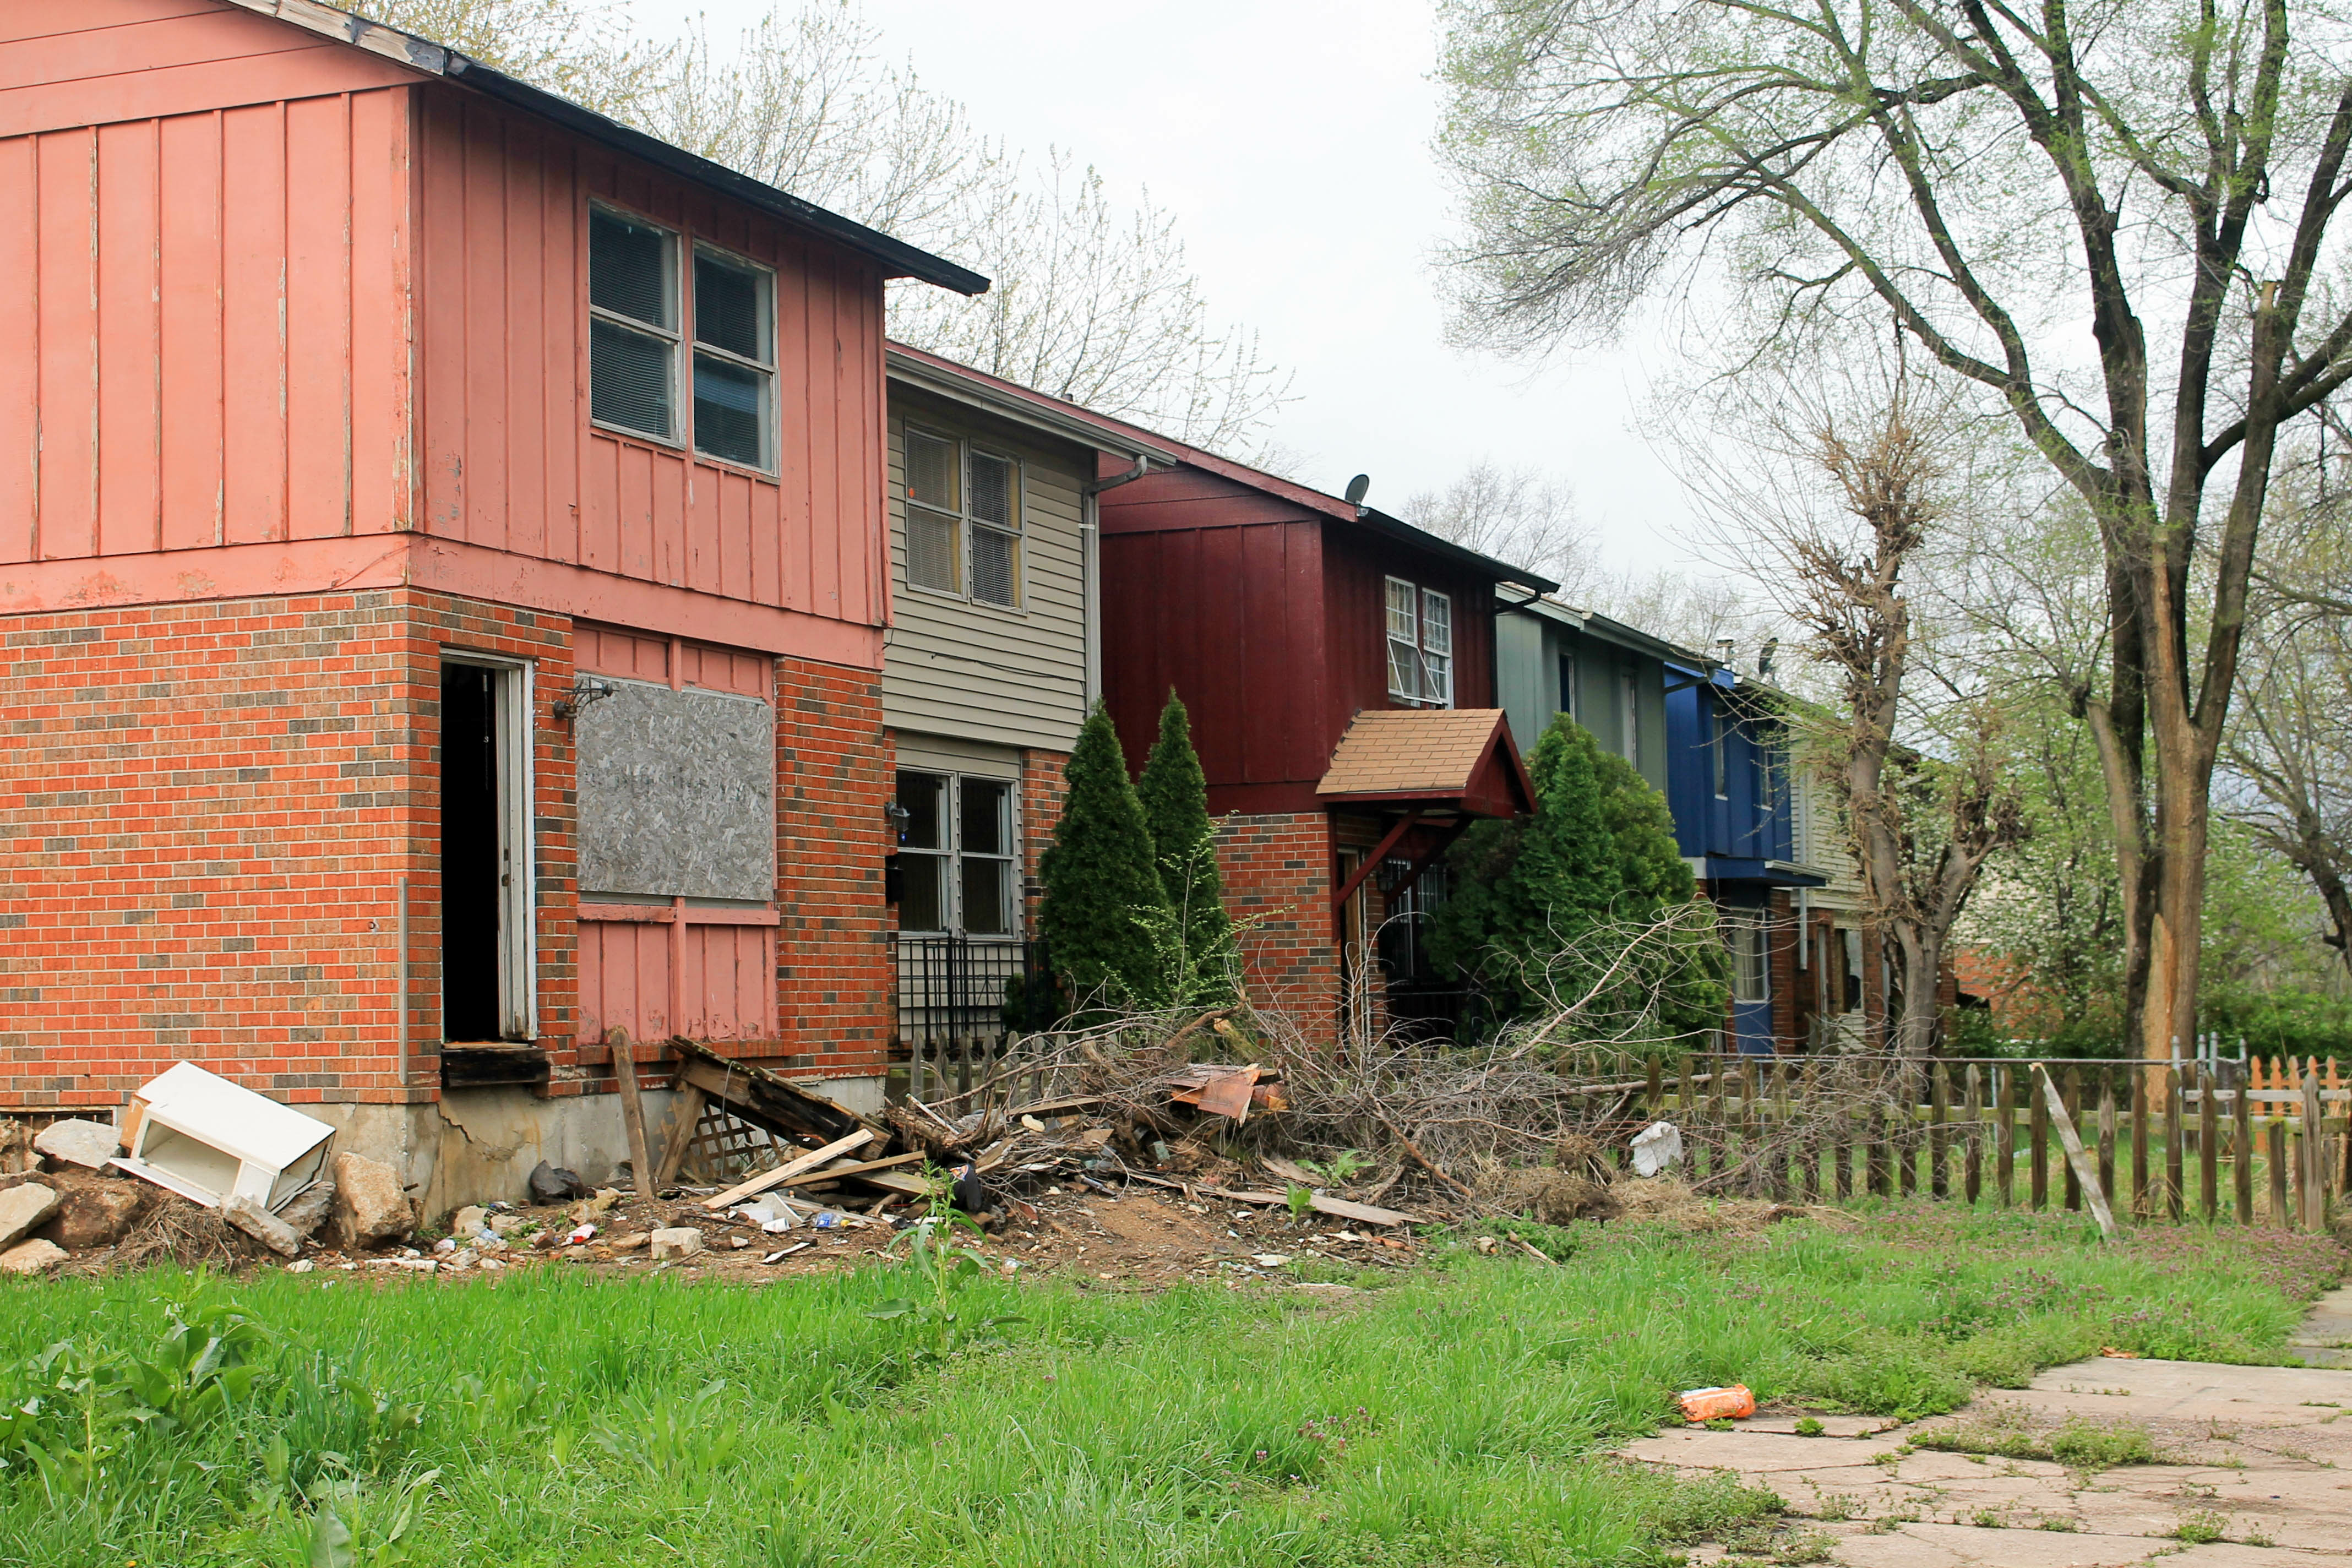 multi unit row housing in disrepair